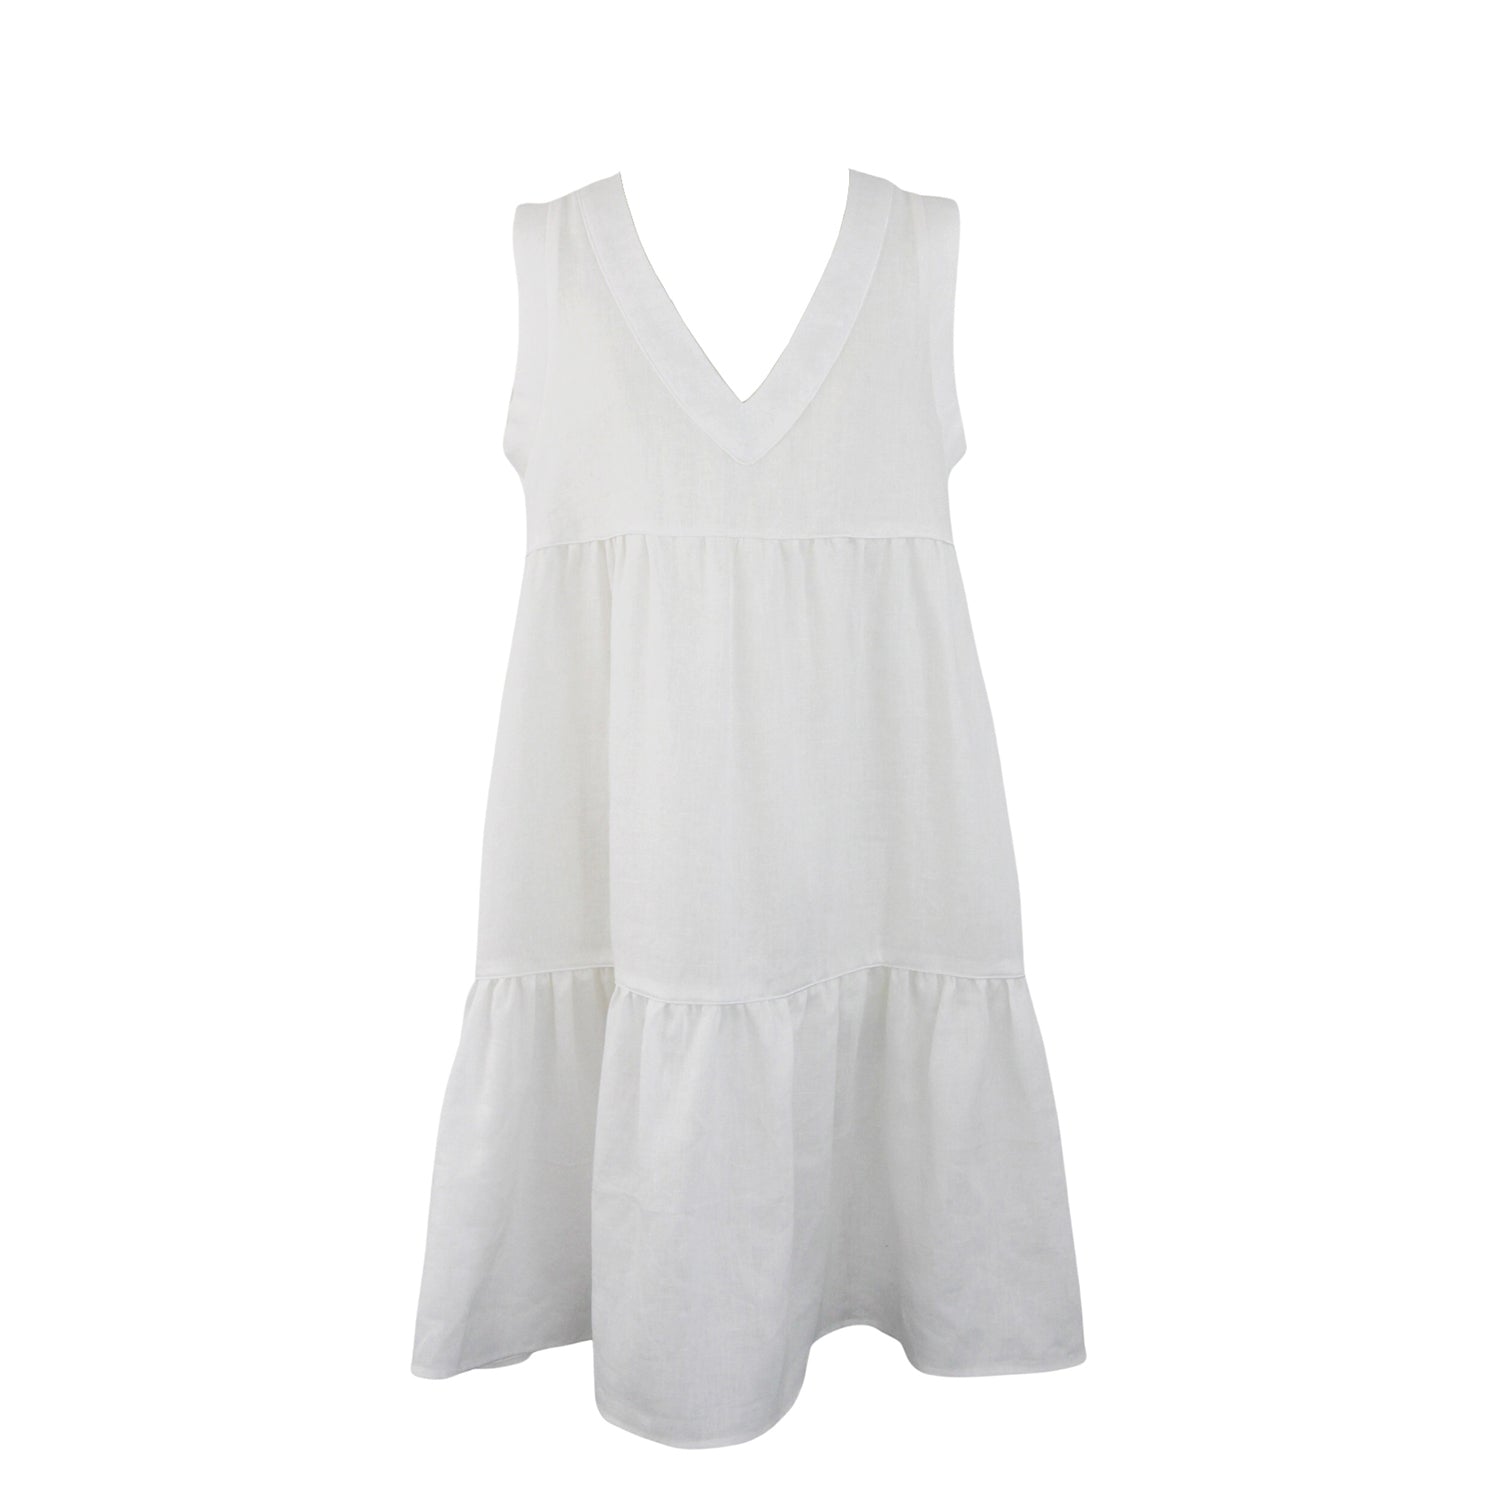 Shop Gosia Orlowska's Valencia Linen Dress in White